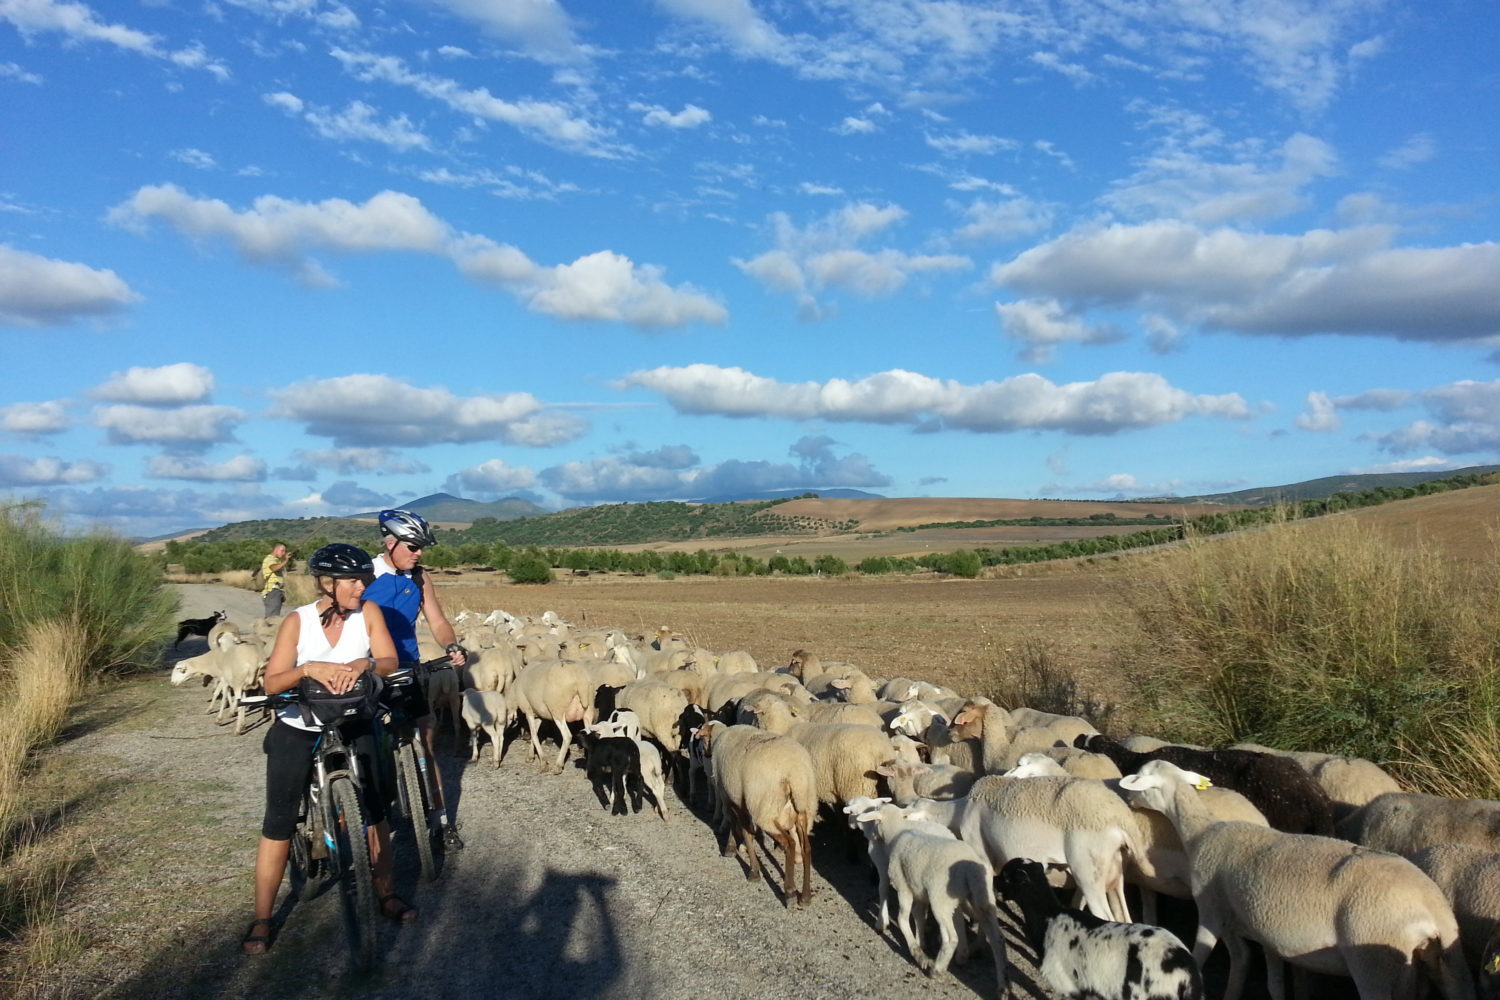 Bike Riders with sheep on bike path